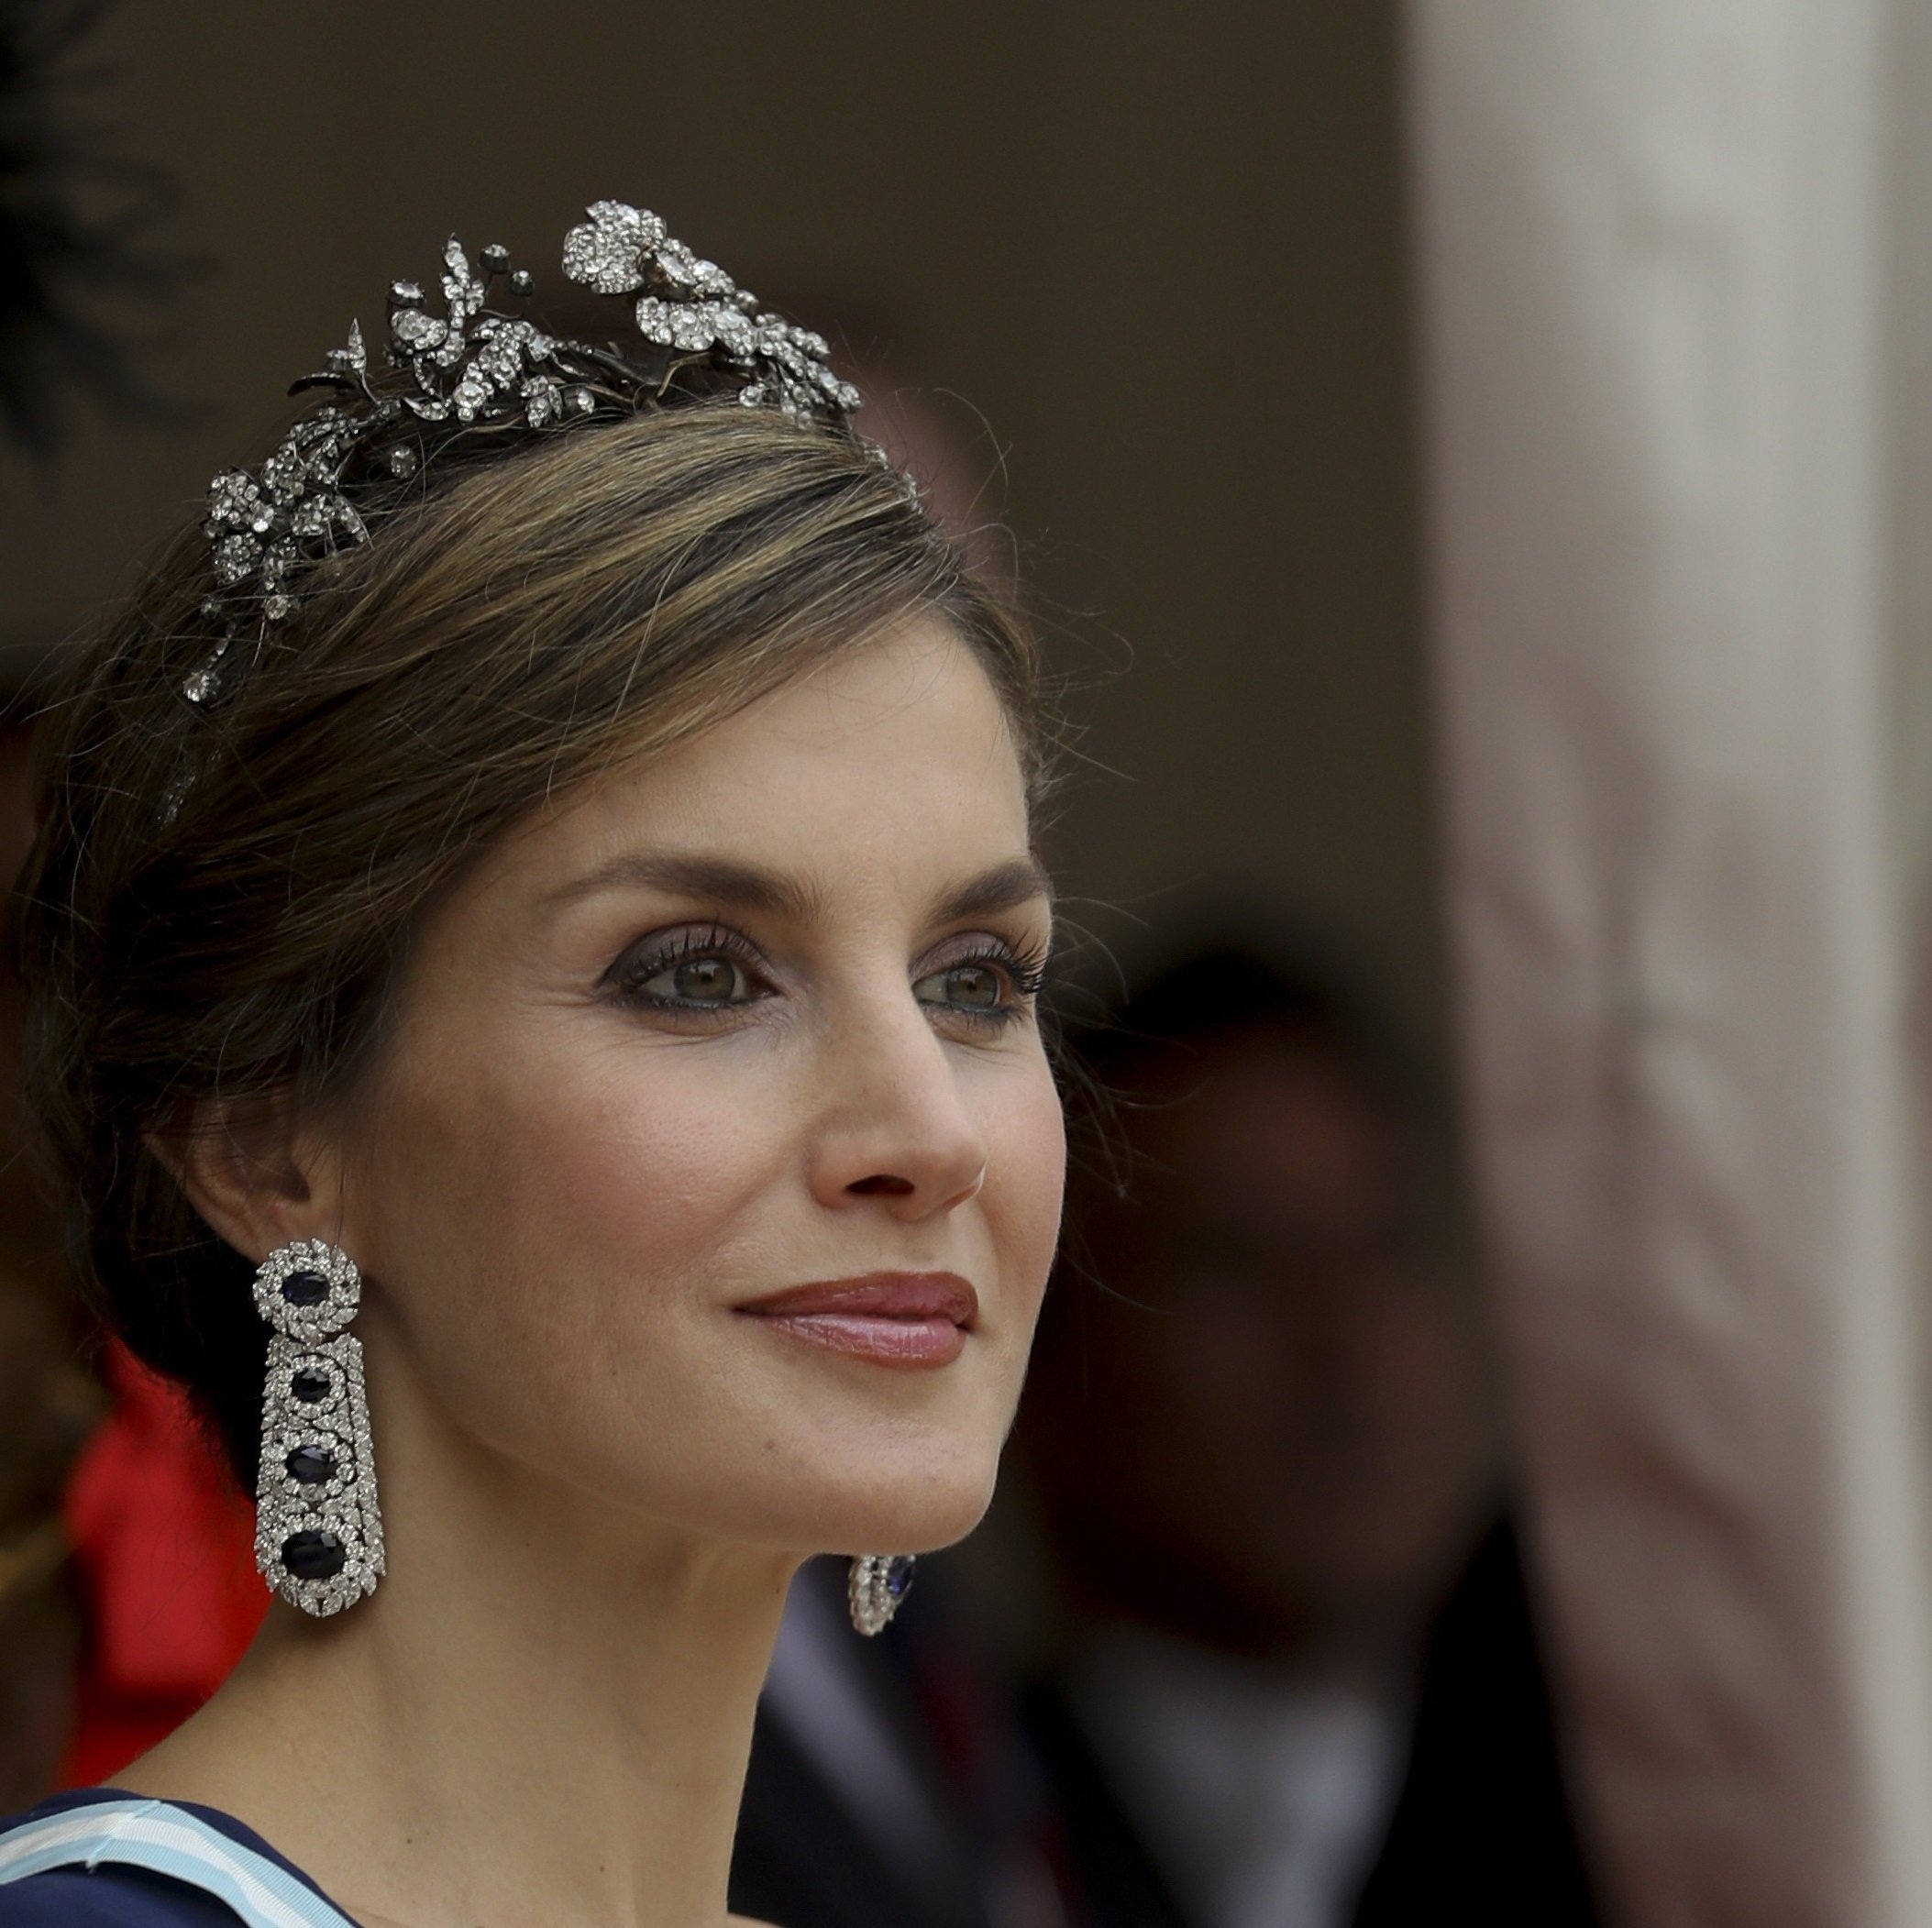 La reina Letizia se viste de diamantes y zafiros en Londres